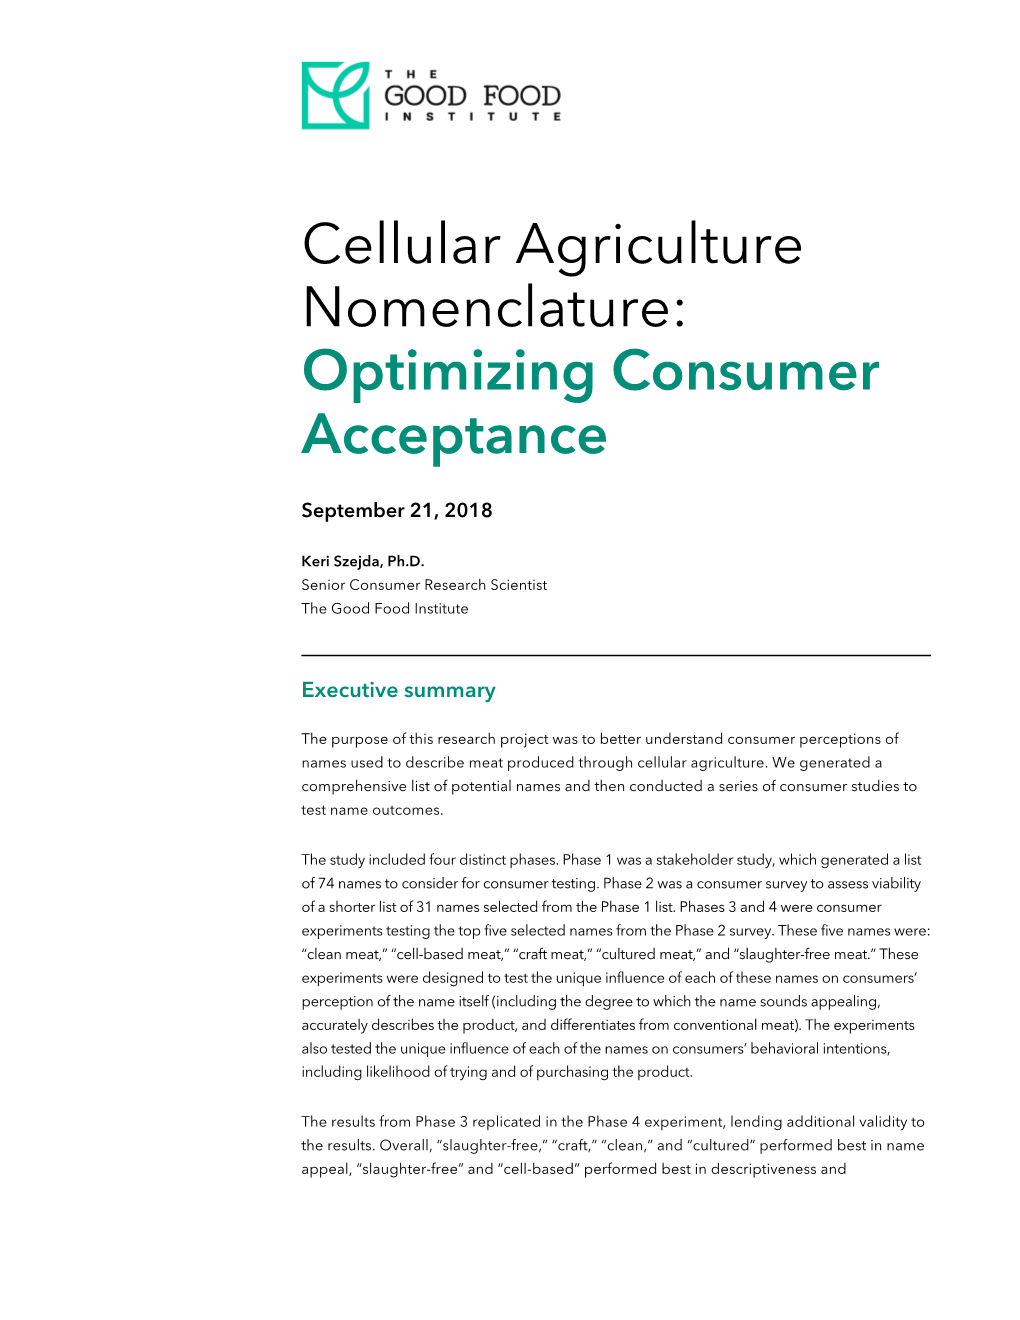 Cellular Agriculture Nomenclature: Optimizing Consumer Acceptance